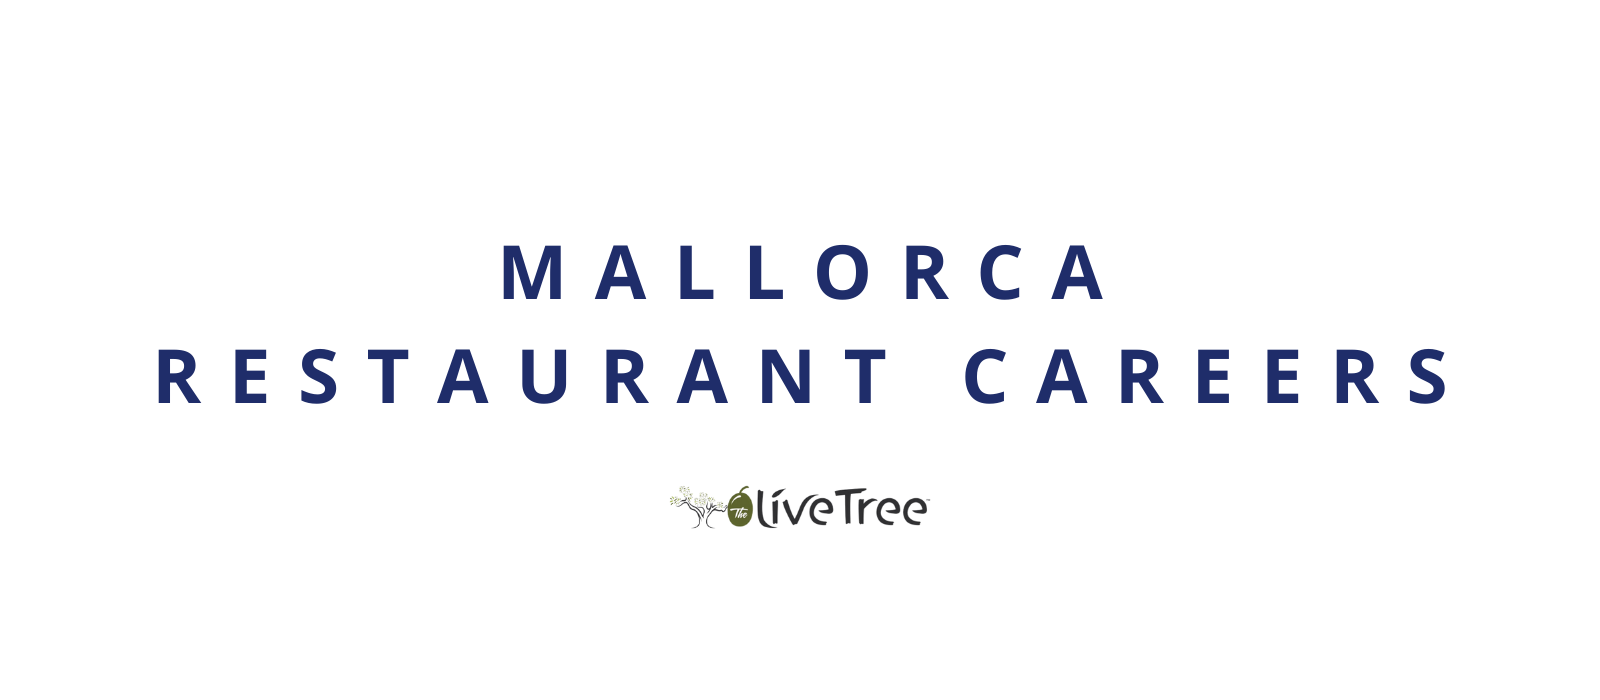 Mallorca Restaurant Careers